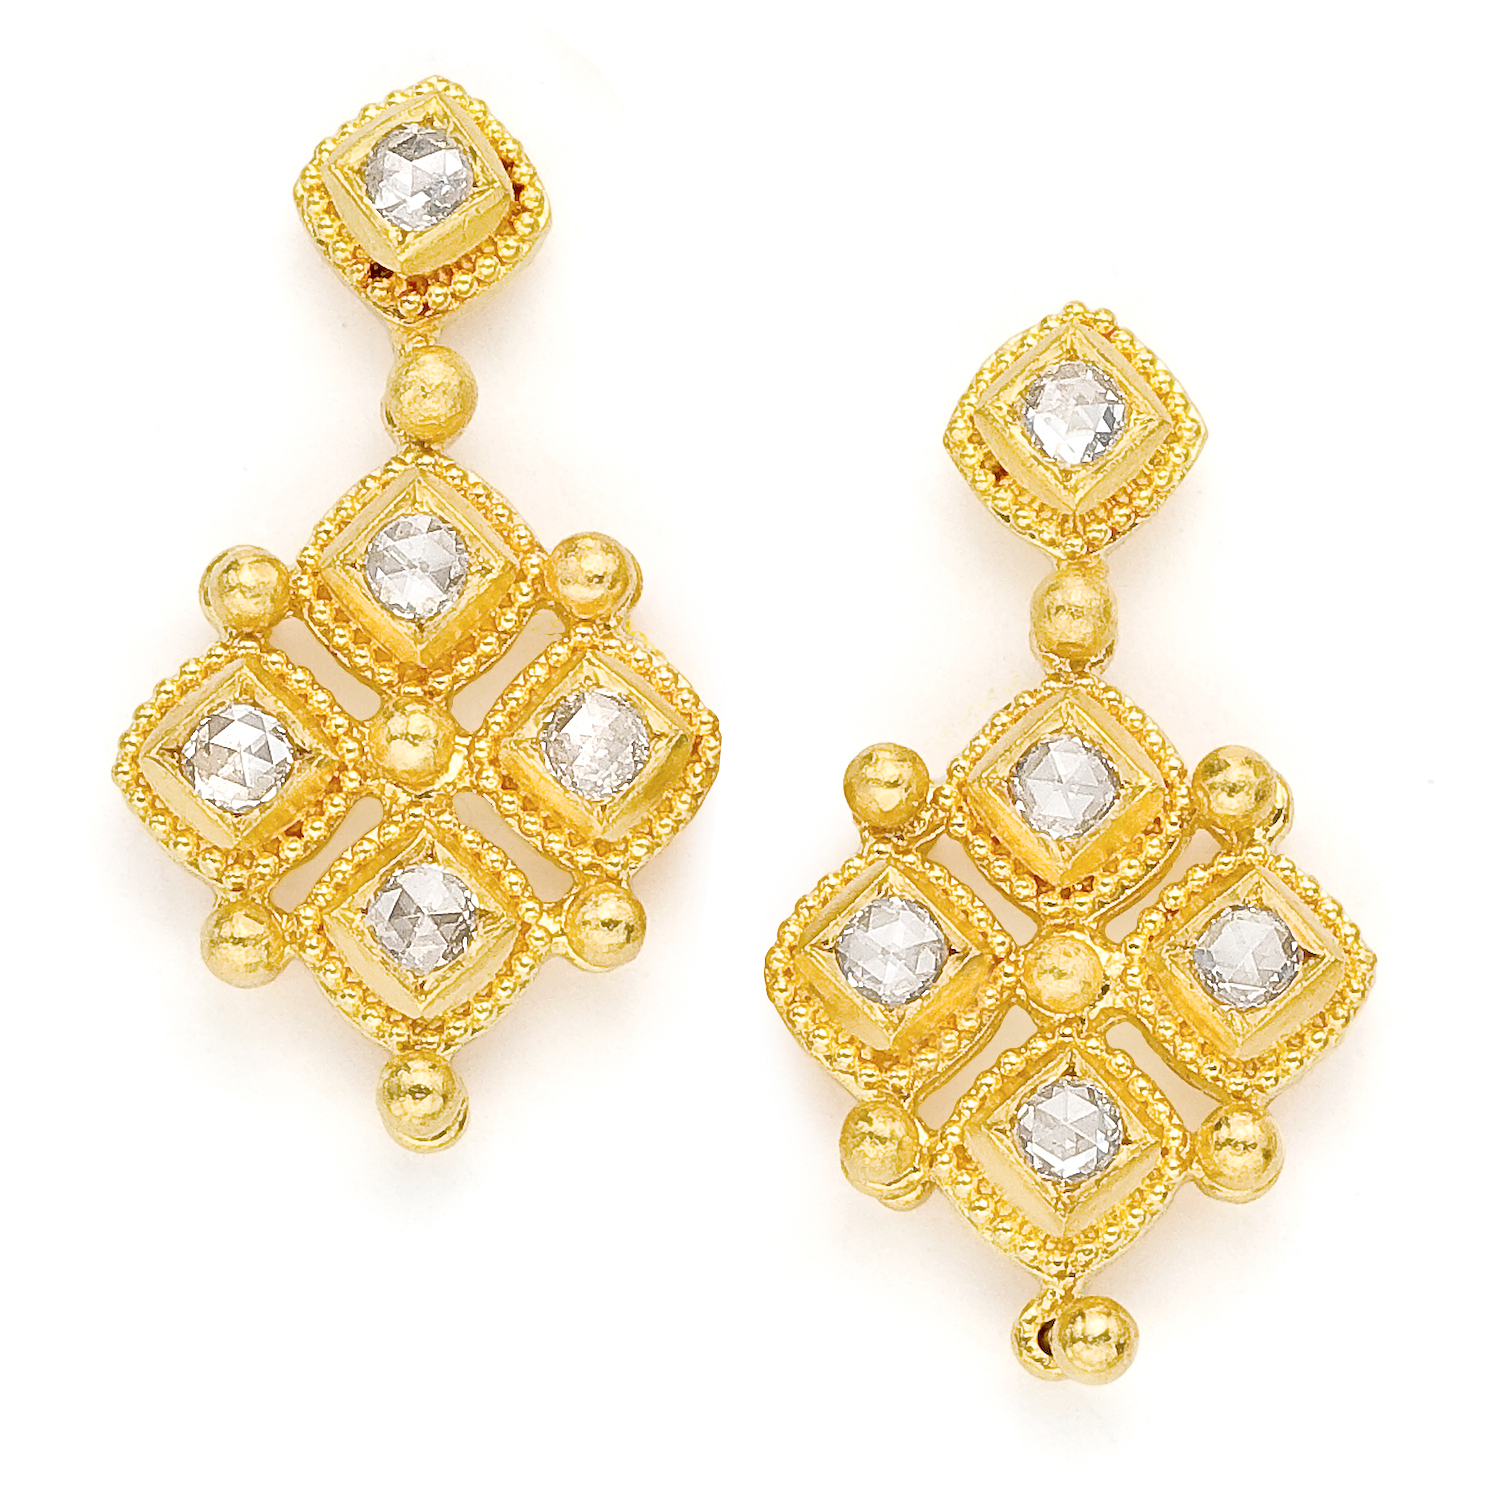 22K gold Rose cut diamond earrings